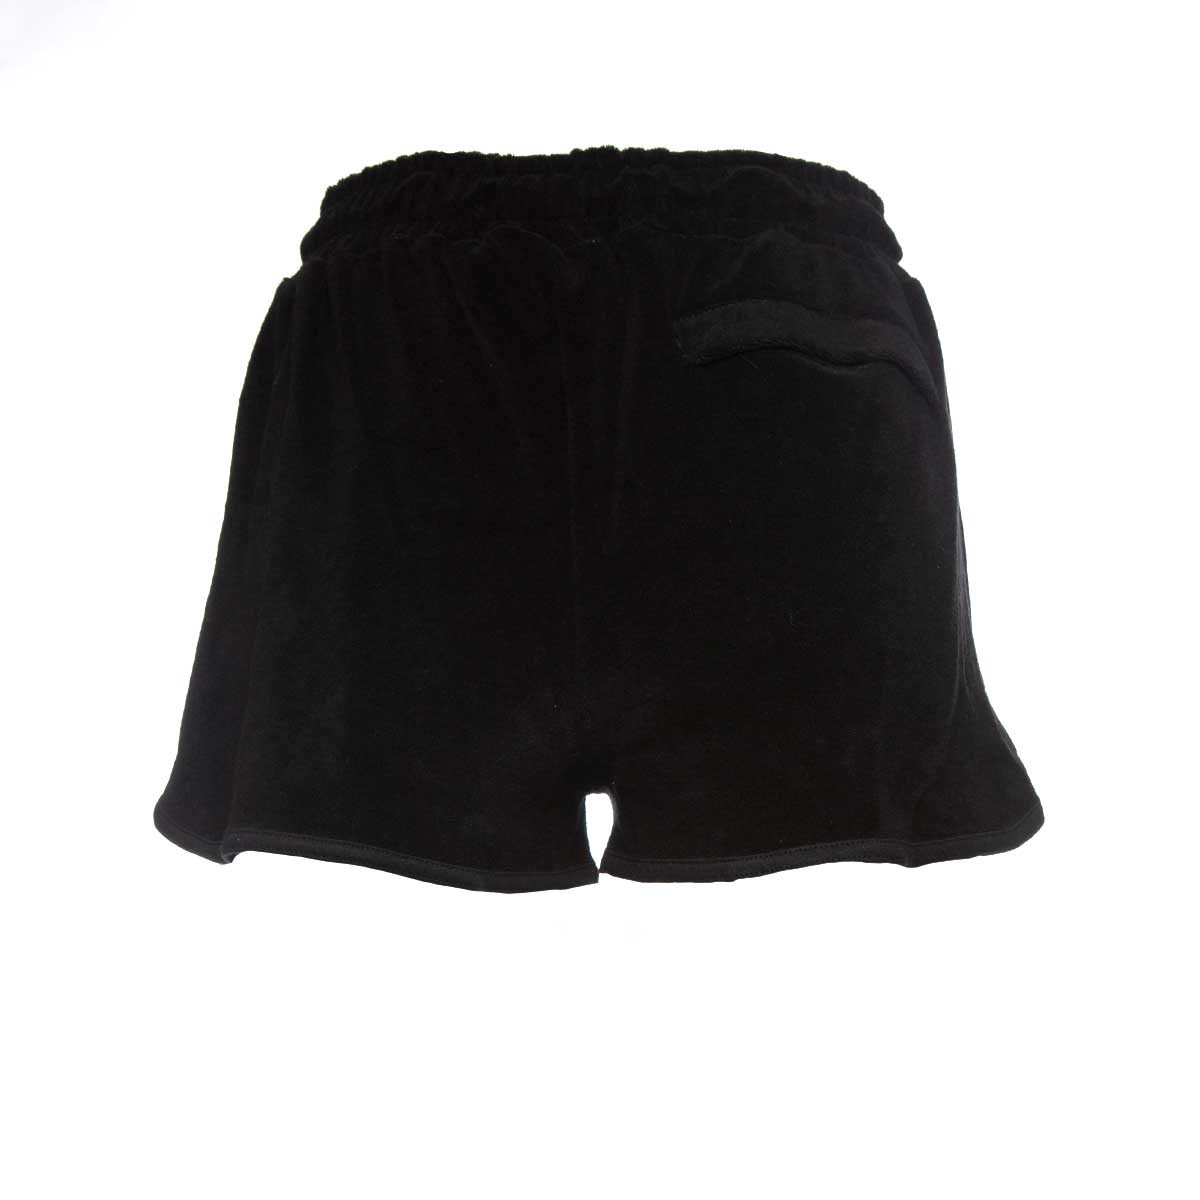 FILA embroiled-logo follie shorts blackFILA embroiled-logo follie shorts black